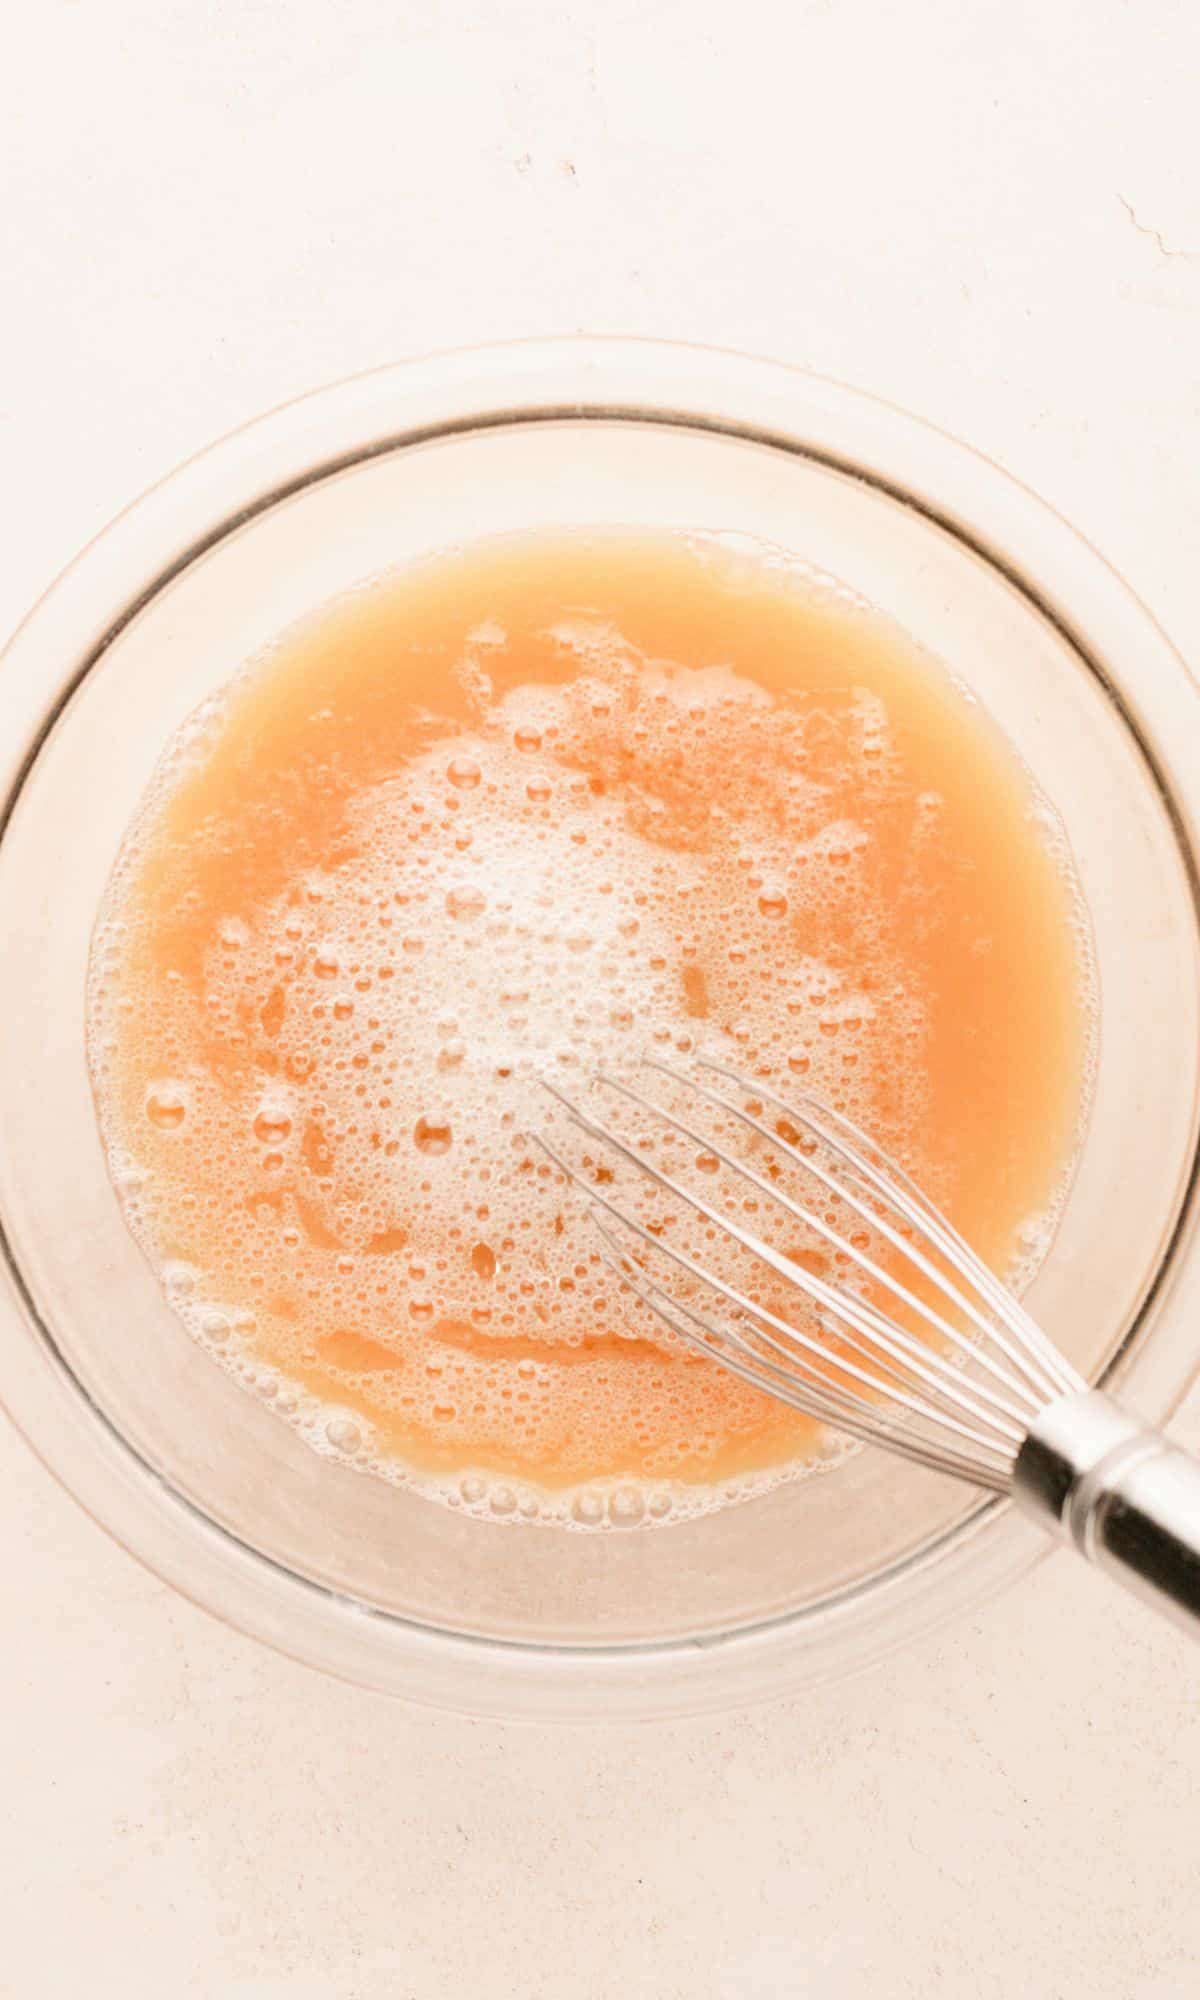 Apple cider pancake preparation in a glass bowl.